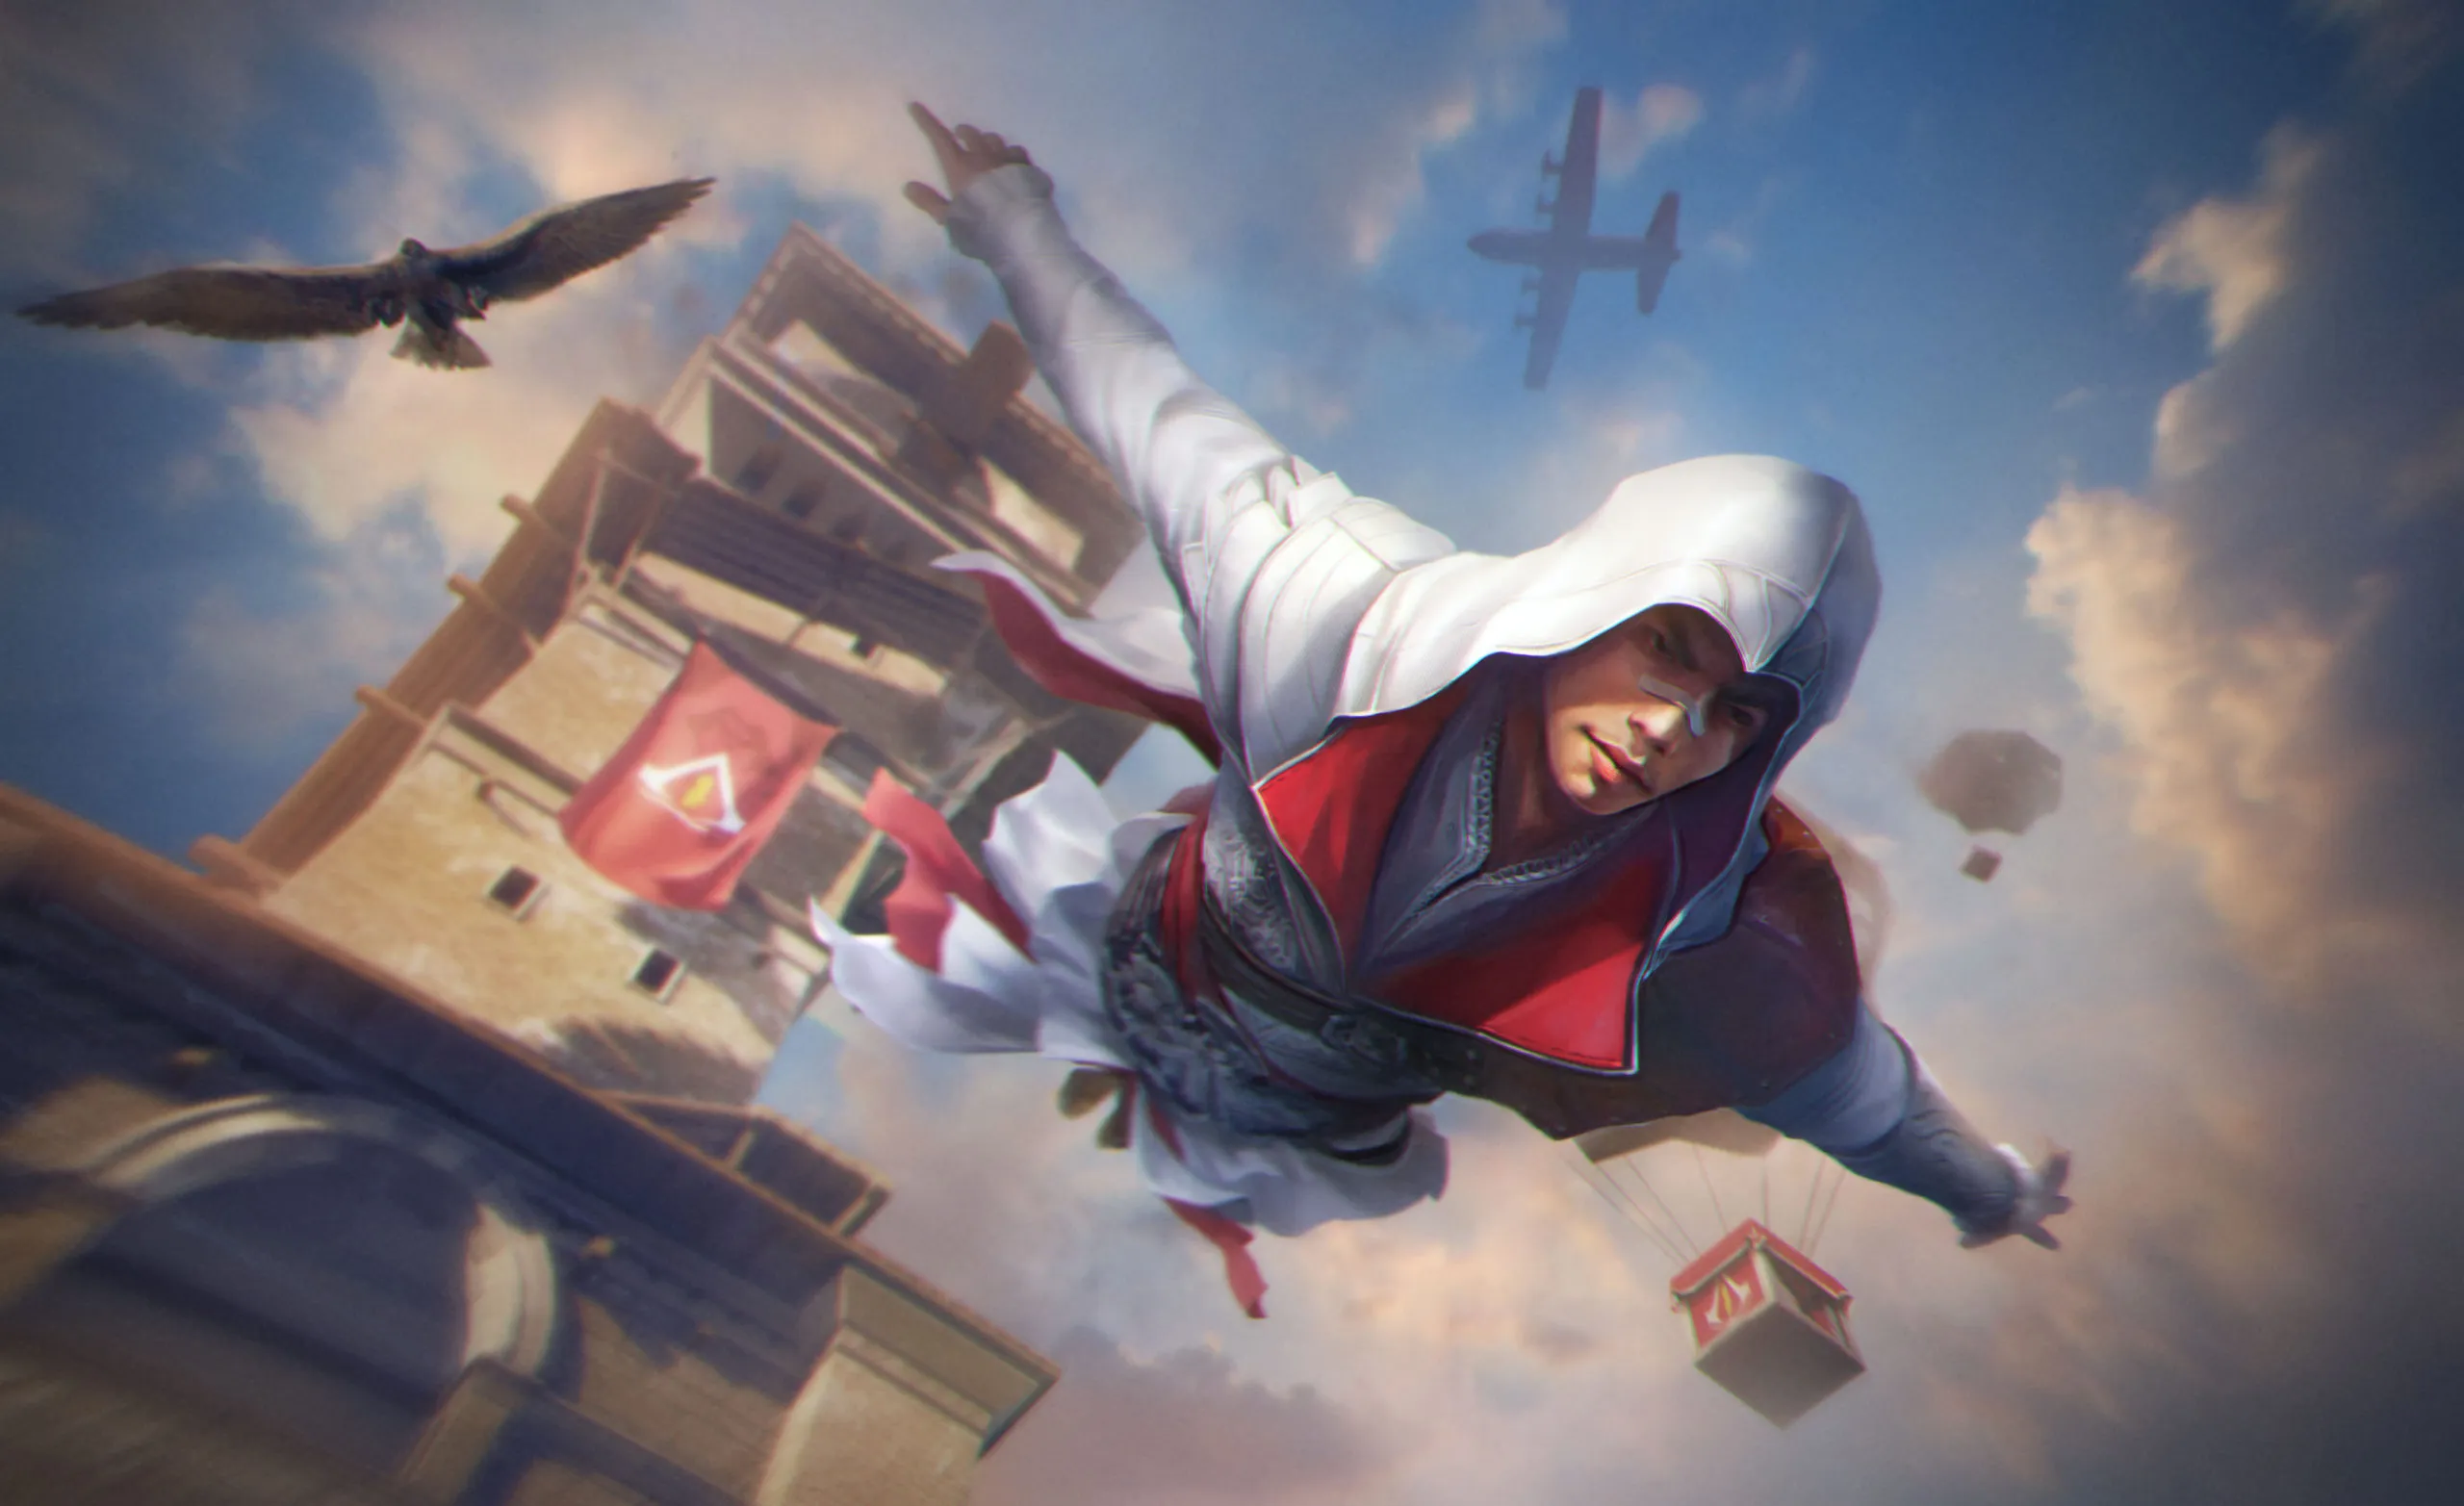 Free Fire terá crossover com Assassin's Creed